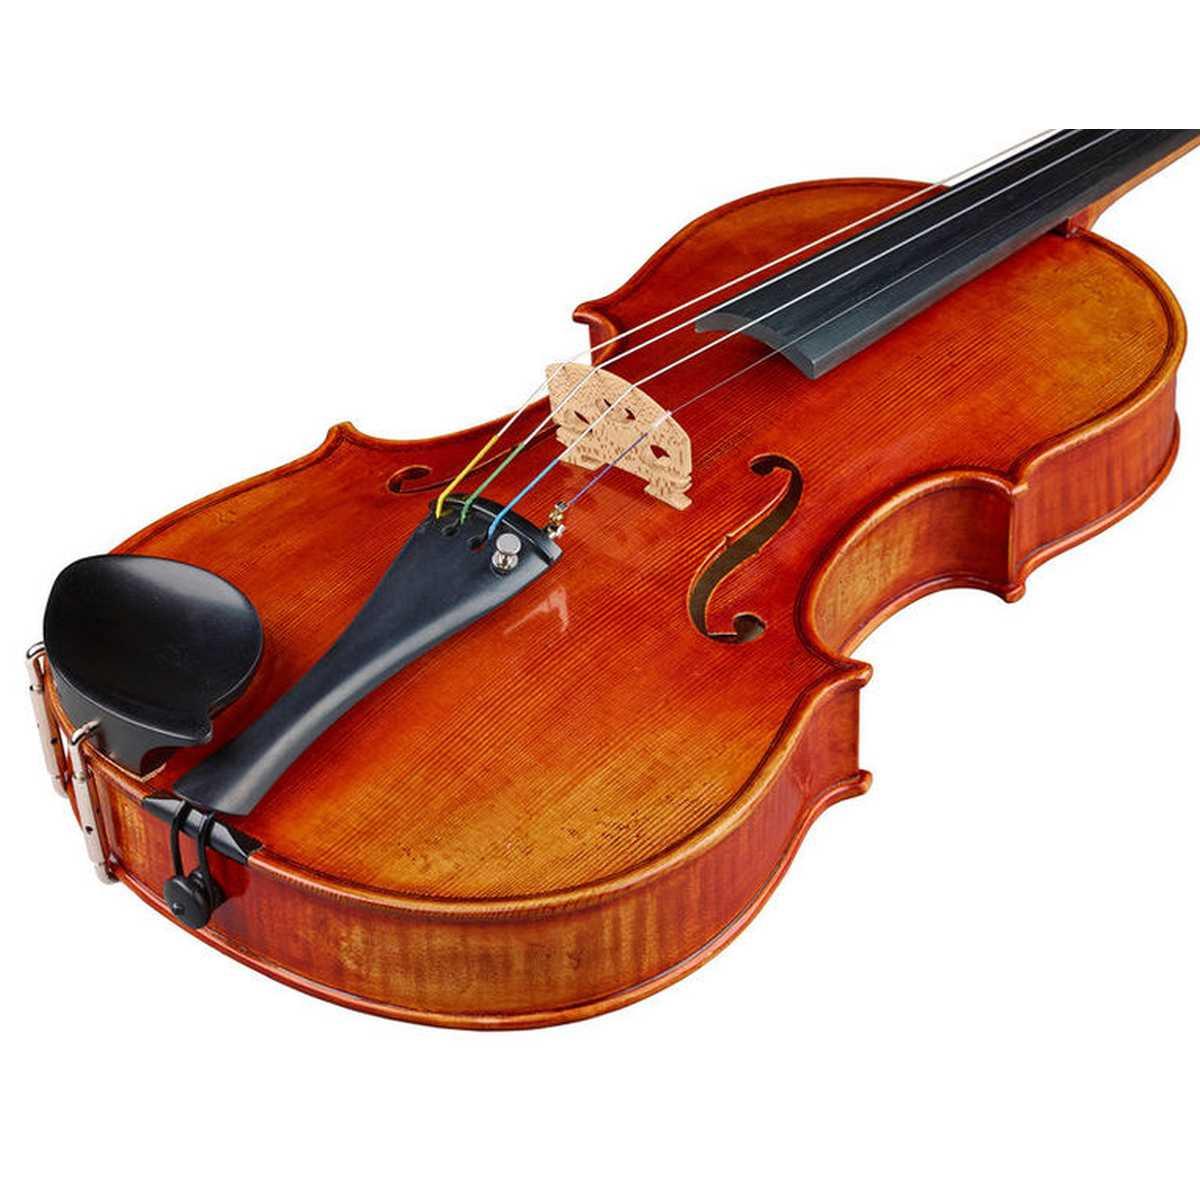 Gewa violino maestro 46 4/4 german style